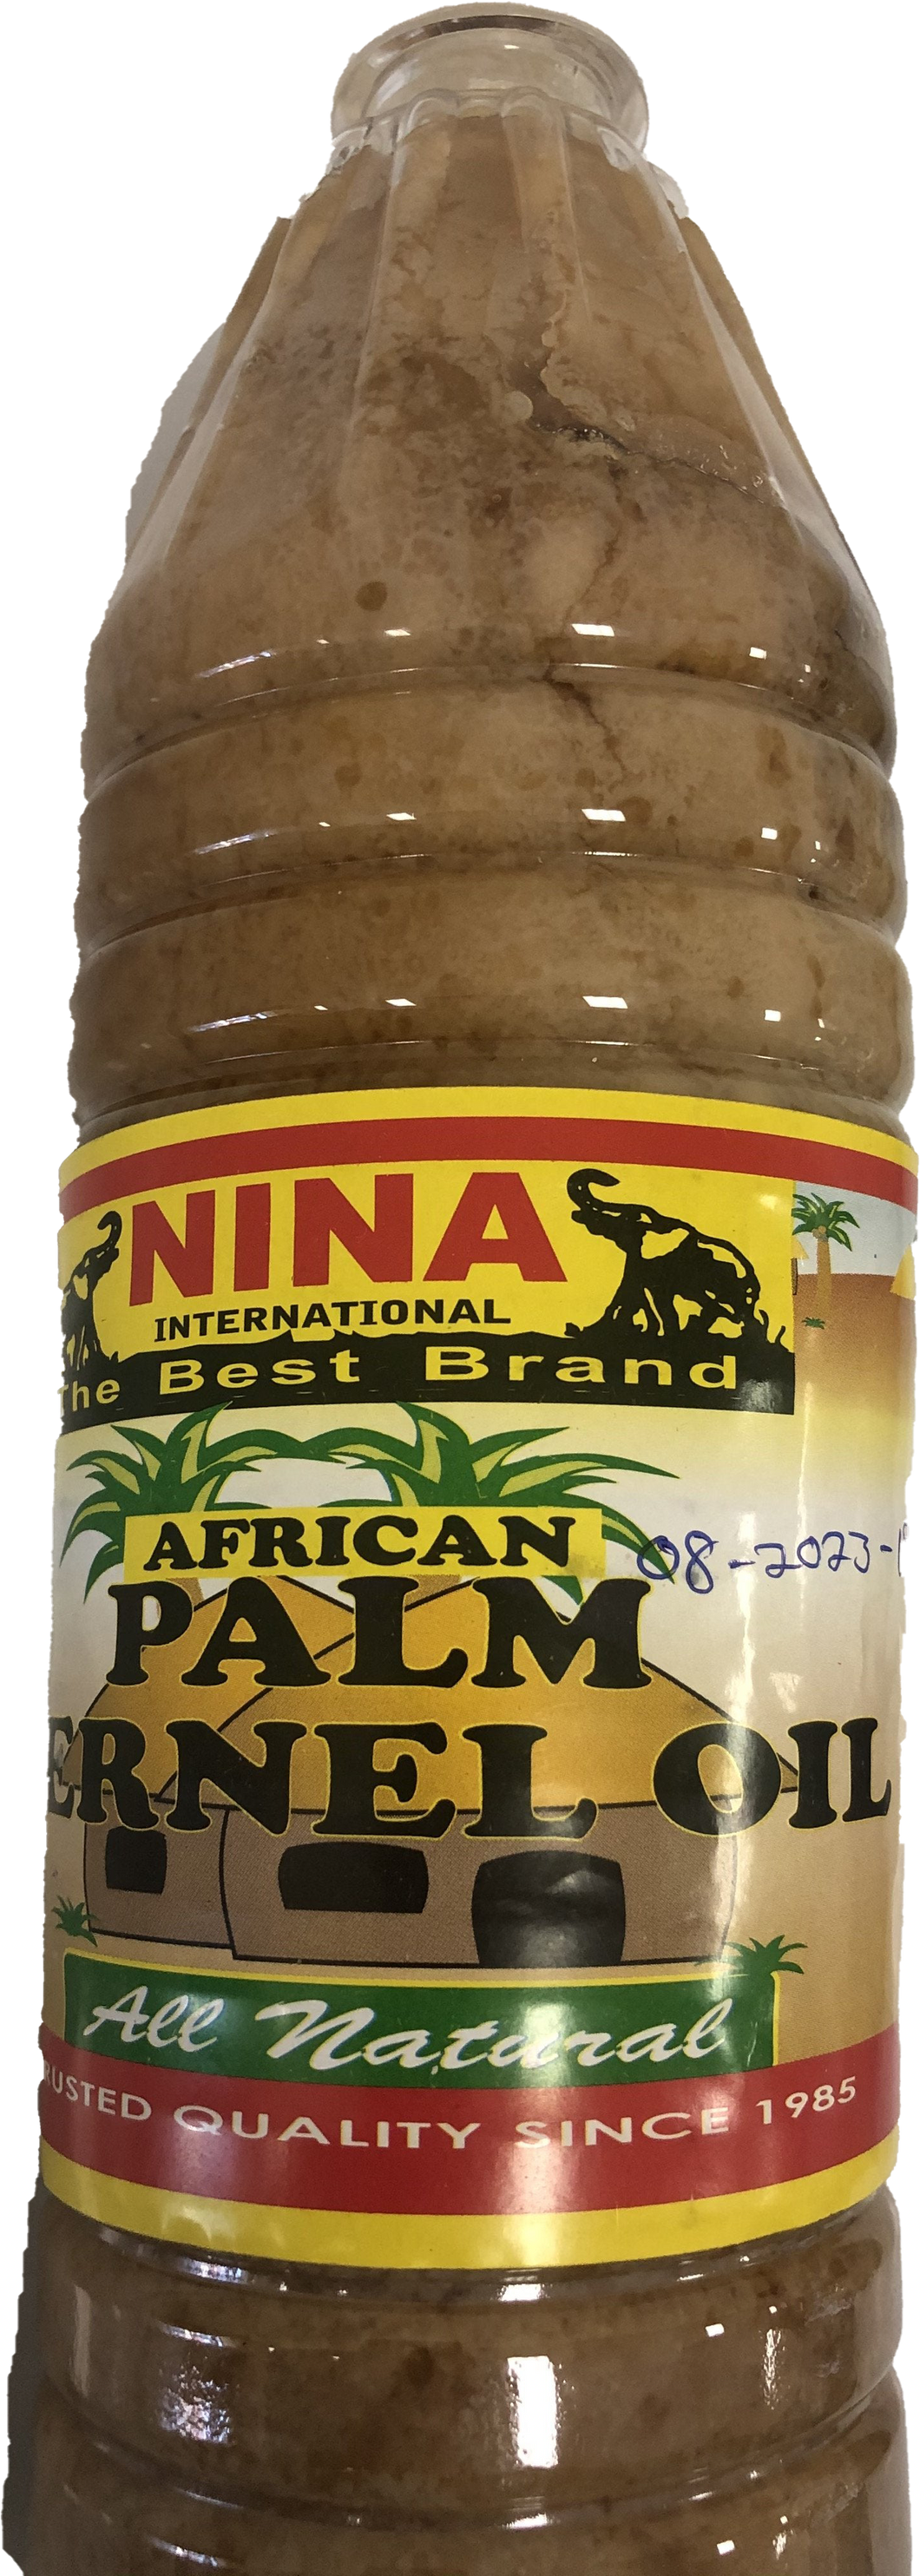 Nina Palm Kernel Oil